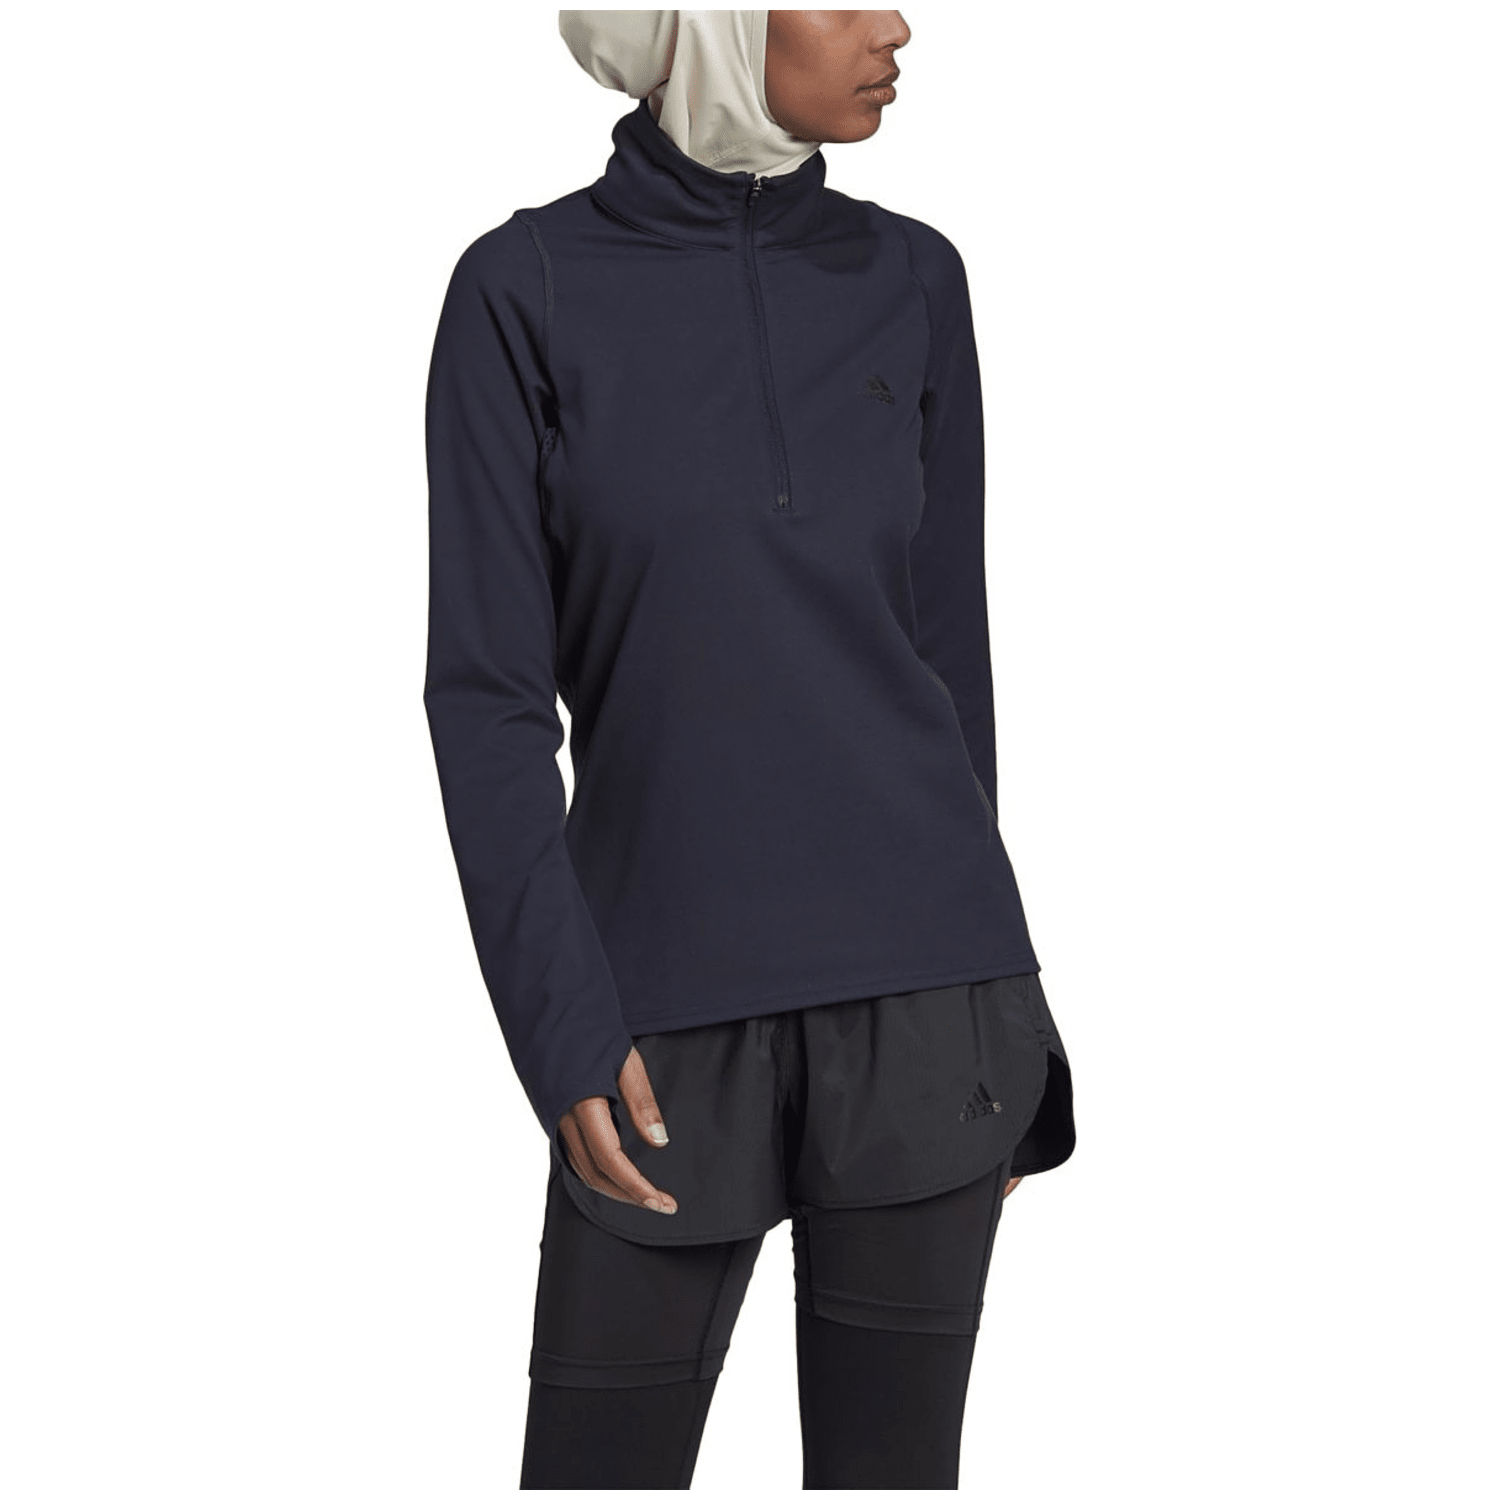 Adidas Run Fast Half-Zip Longsleeve Damen Sweatshirt